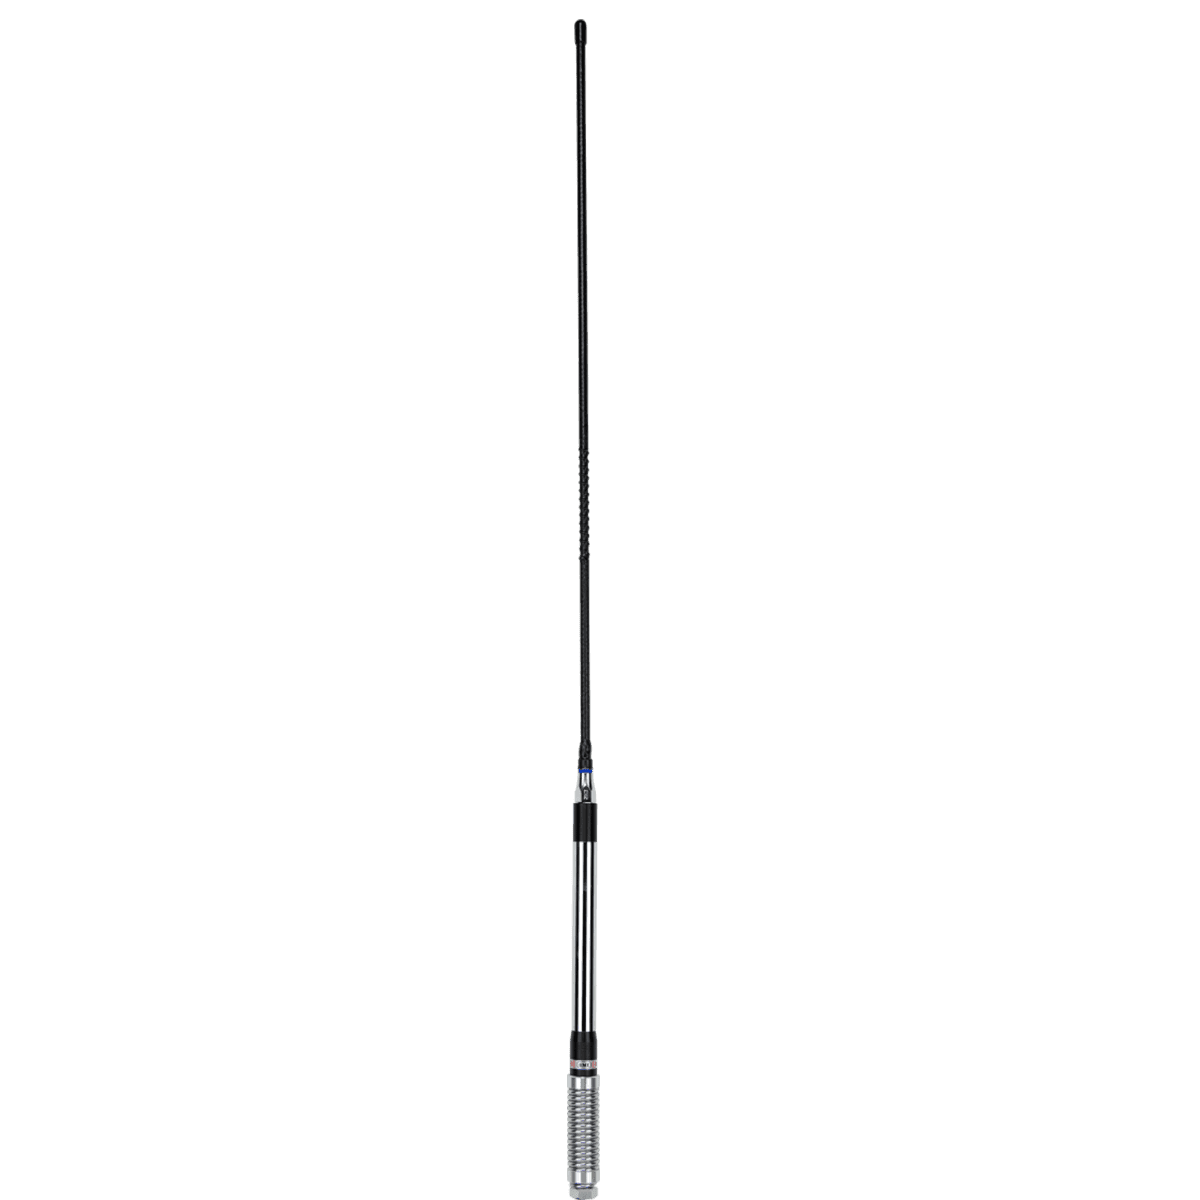 GME AE4018K1 970mm Elevated-Feed Antenna (6.6dBi Gain) - Black - NZ Offroader